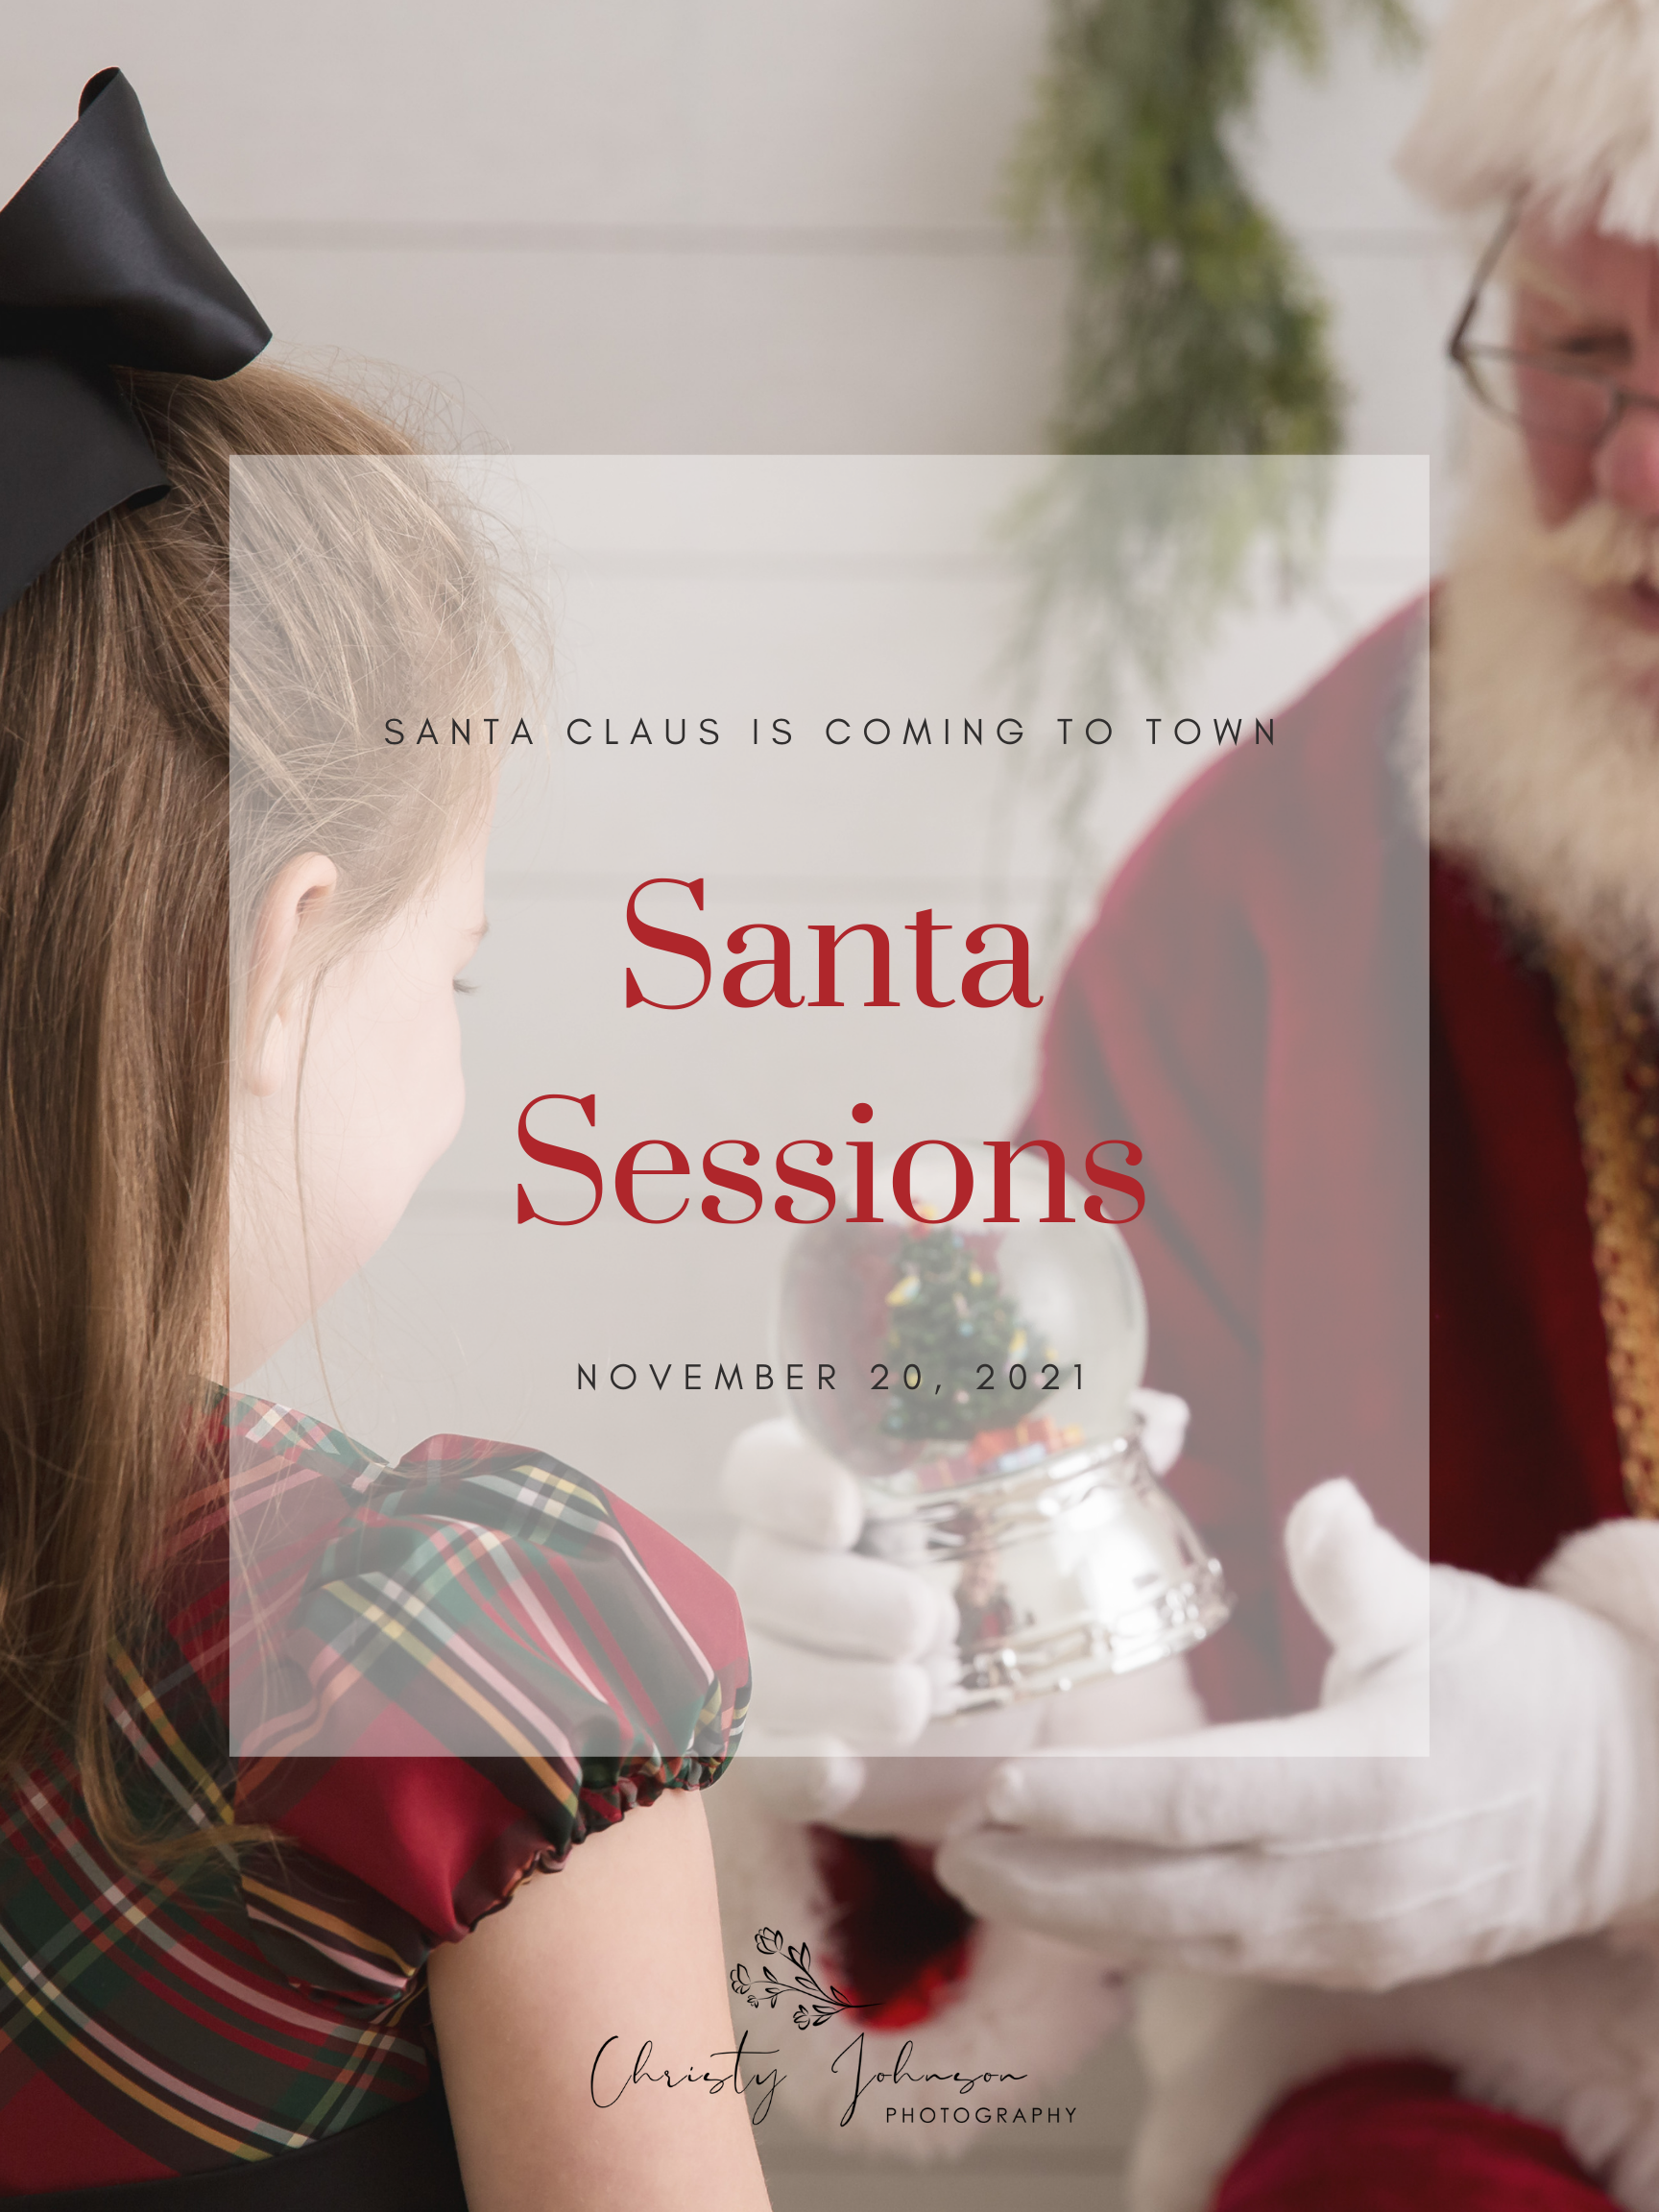 Santa Sessions promotion for Santa